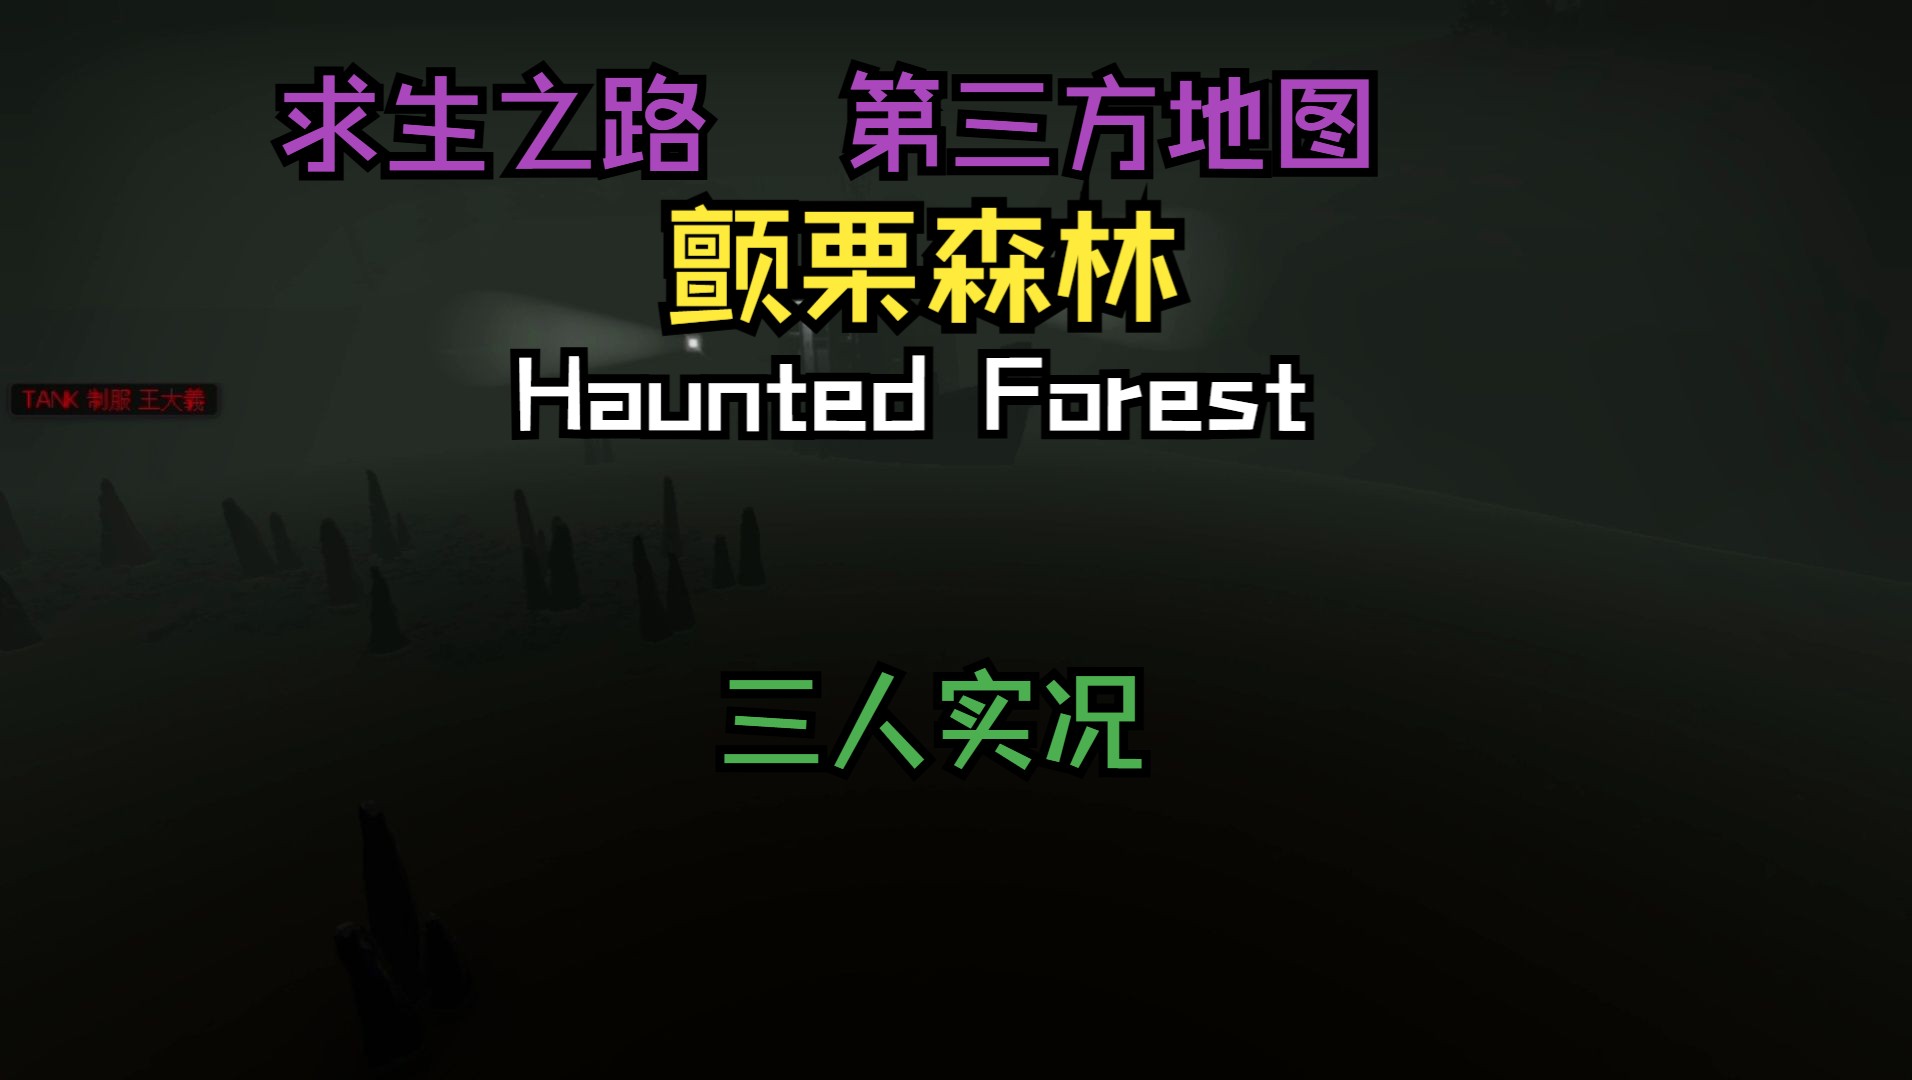 【求生之路】三人实况 第三方地图 颤栗森林(haunted forest)